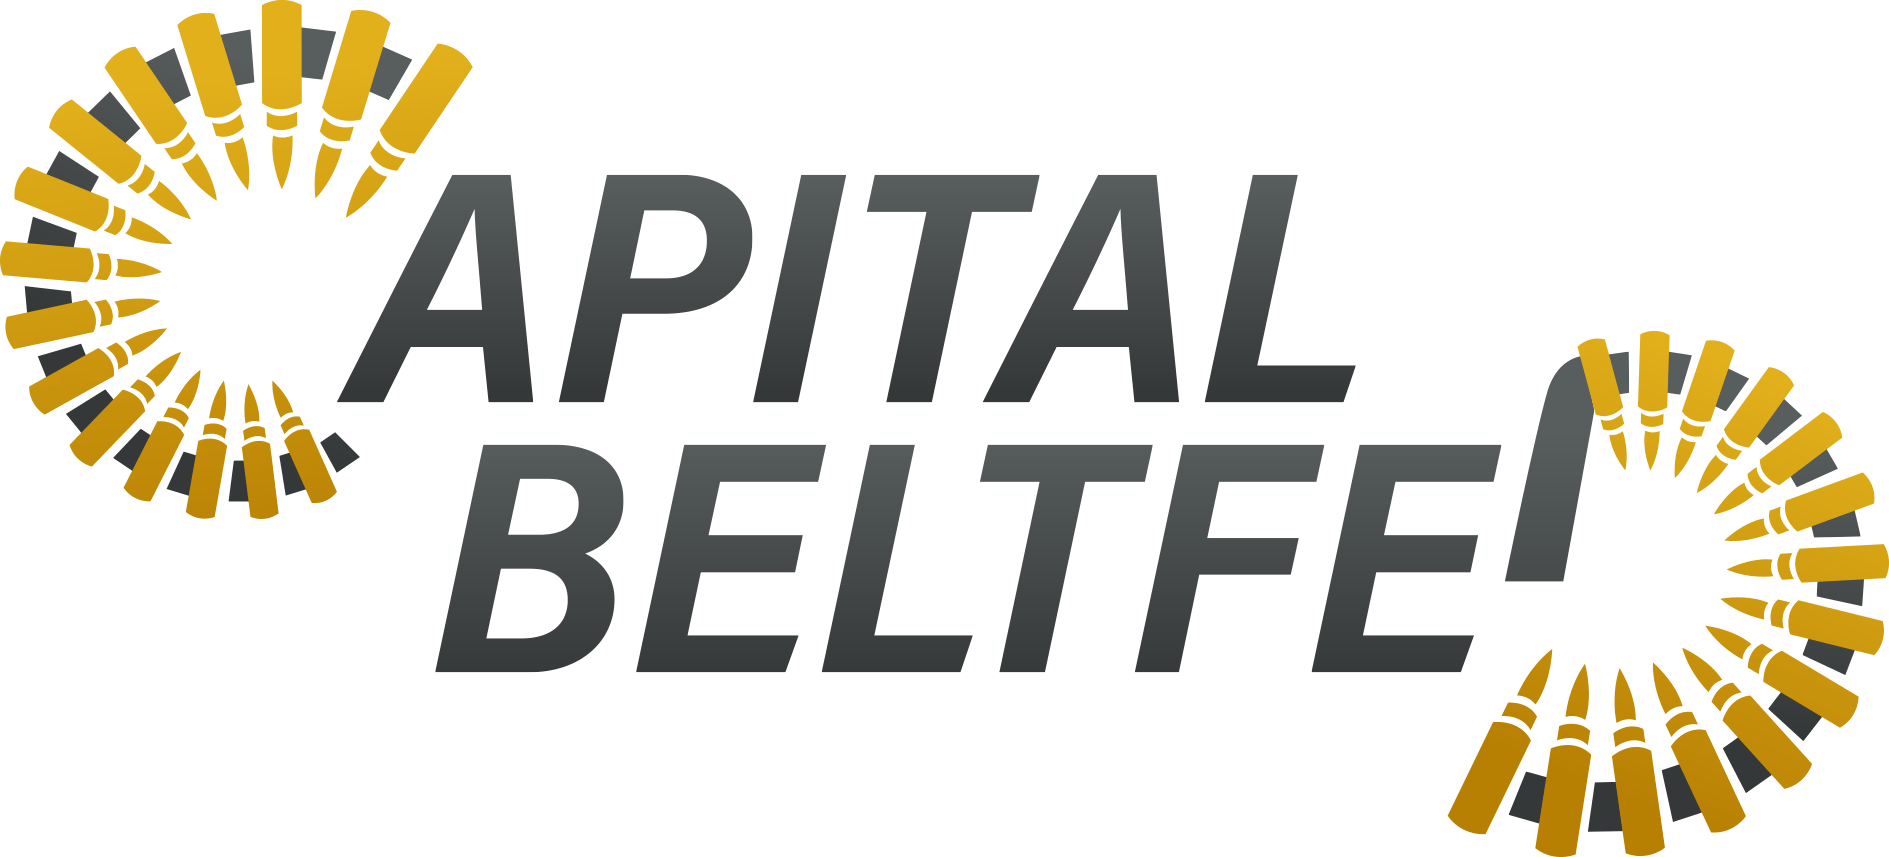 Capital Beltfed